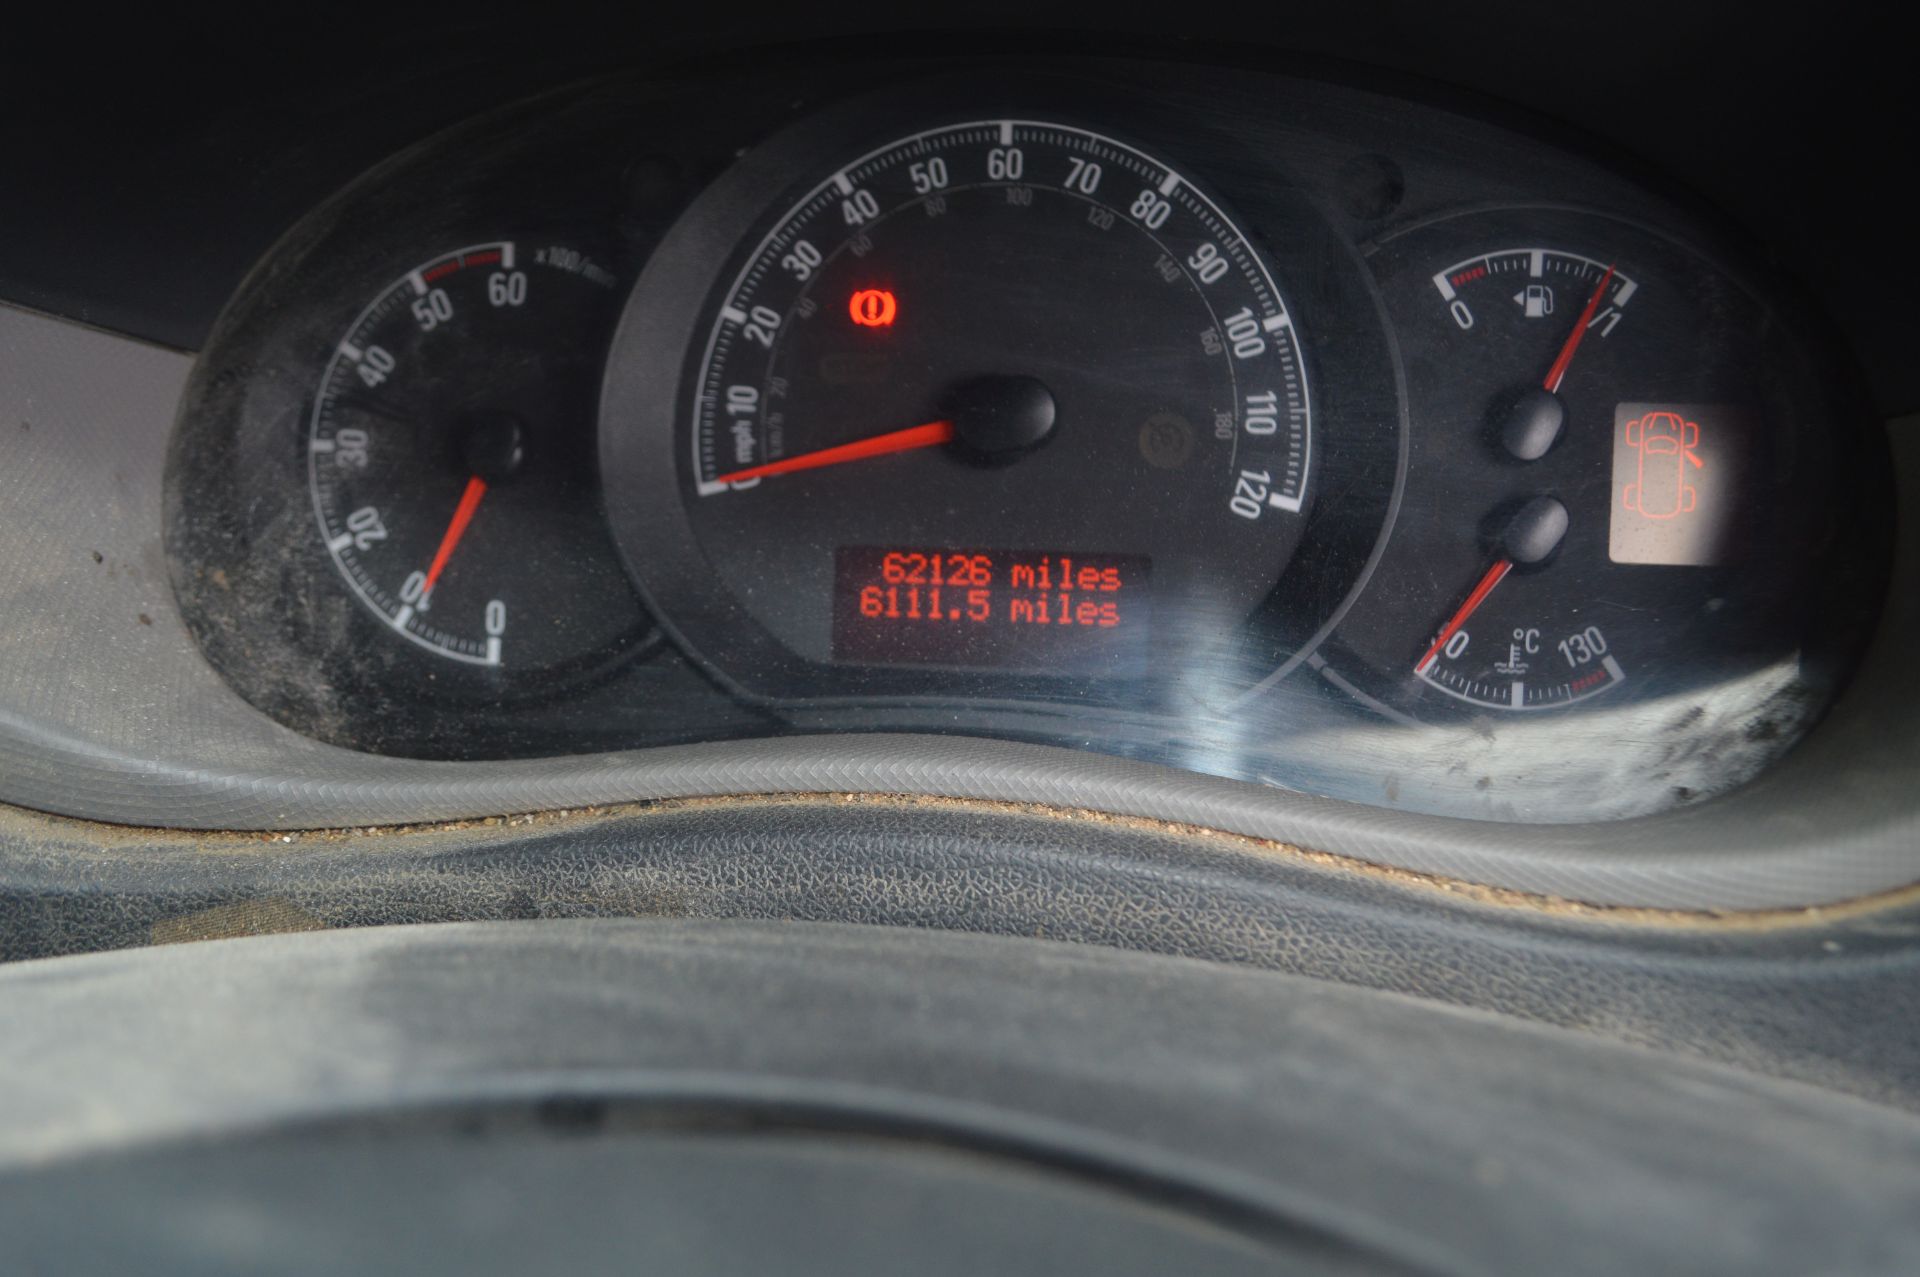 *Vauxhall Movano R3500 CDTI Tipper, Reg: DT15 FDM, Mileage: 62126 Miles - Image 3 of 11